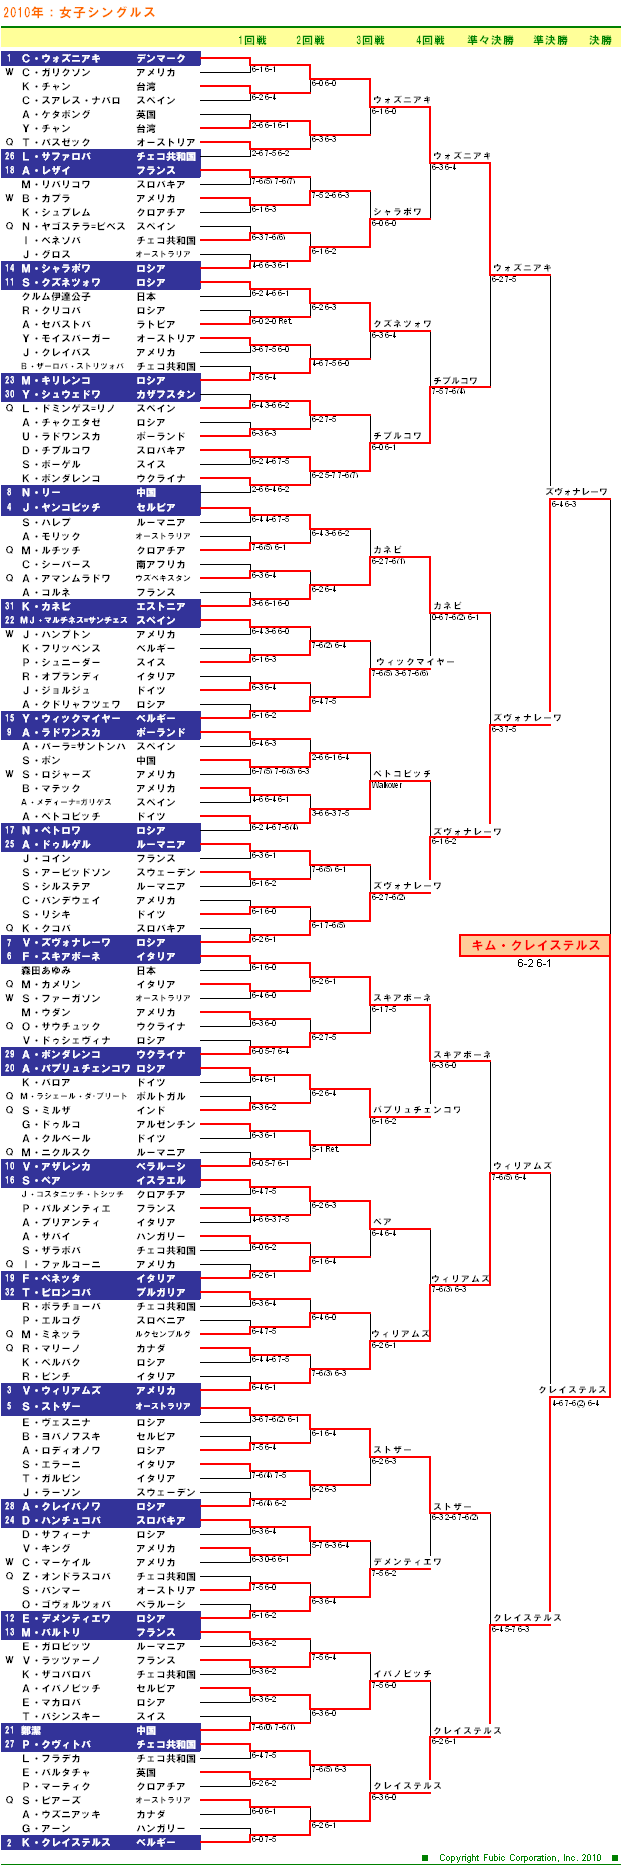 USオープンテニステニス2010　女子シングルスドロー表